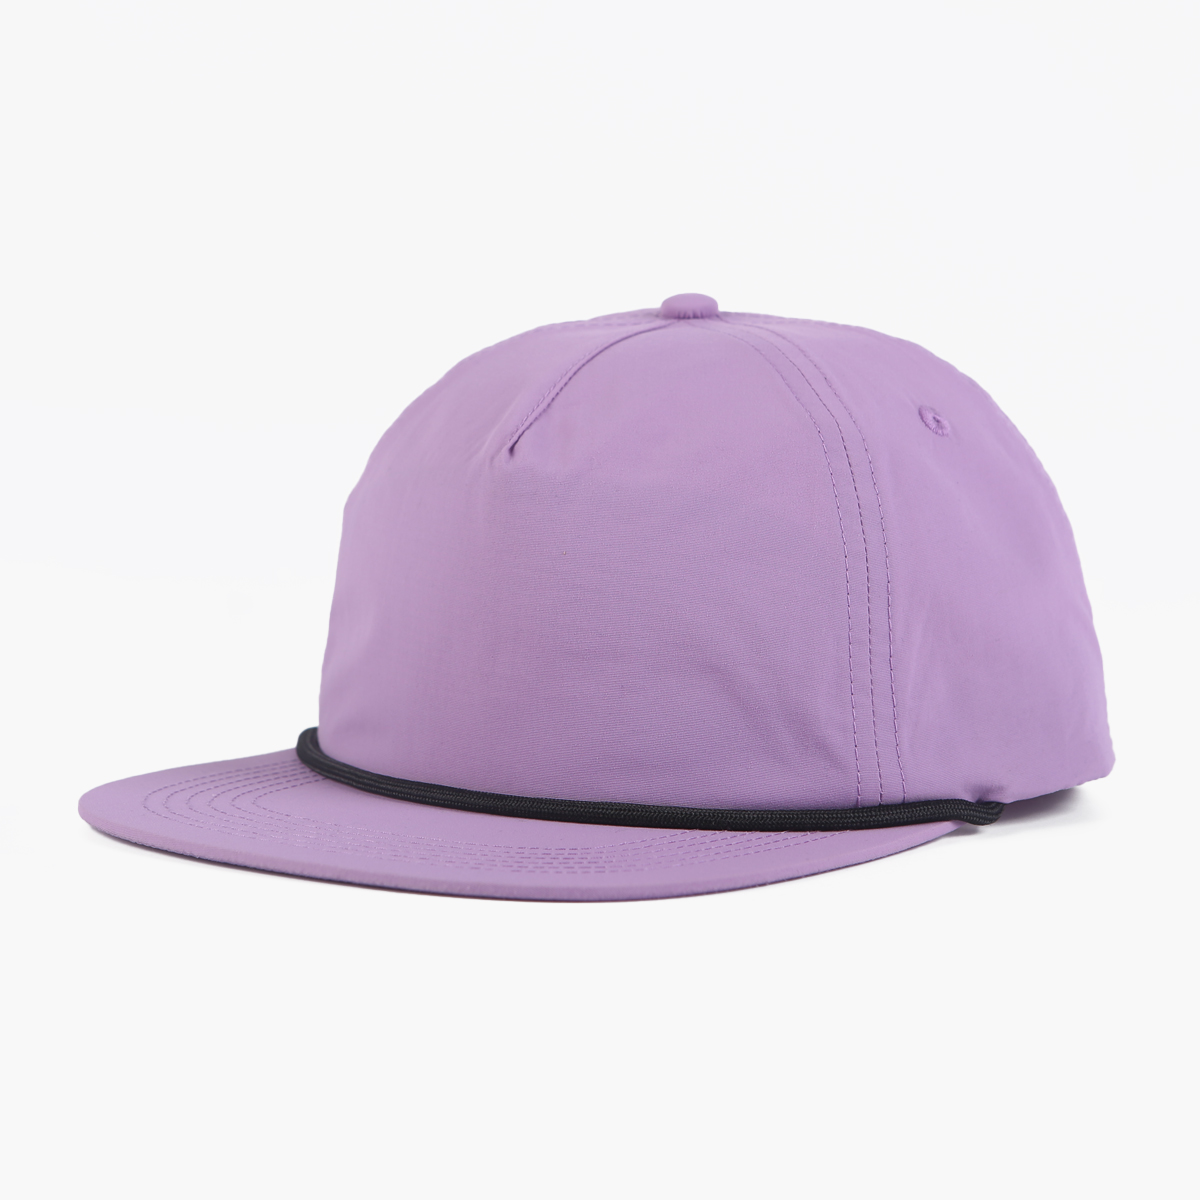 Got a generic straw cap. The purple shades don't match but it'll